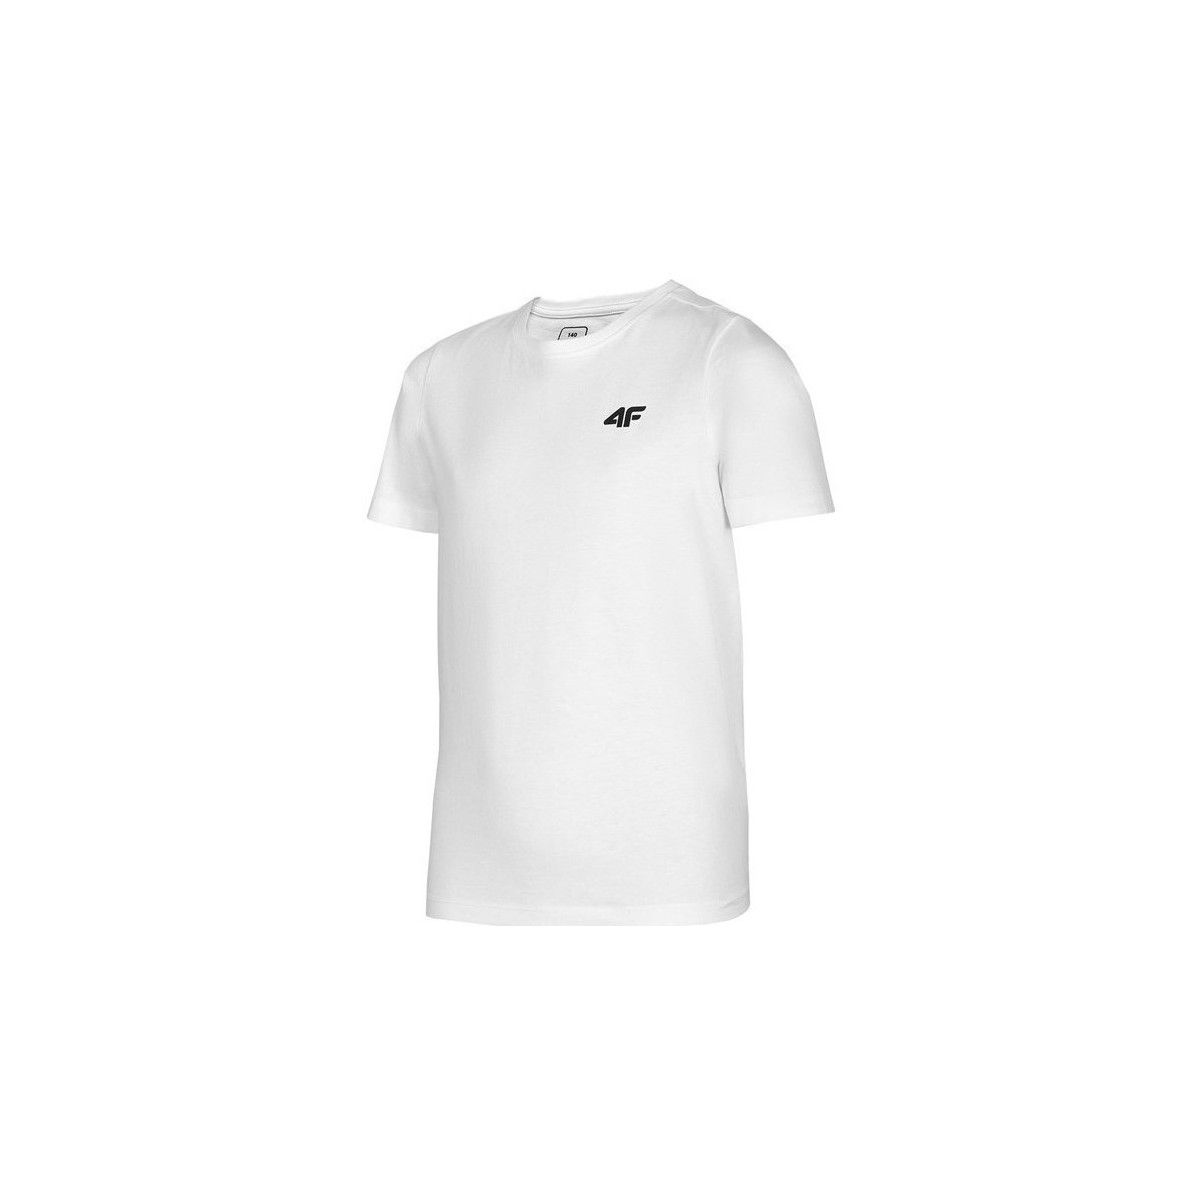 Vêtements Garçon T-shirts manches courtes 4F JTSM001 Blanc